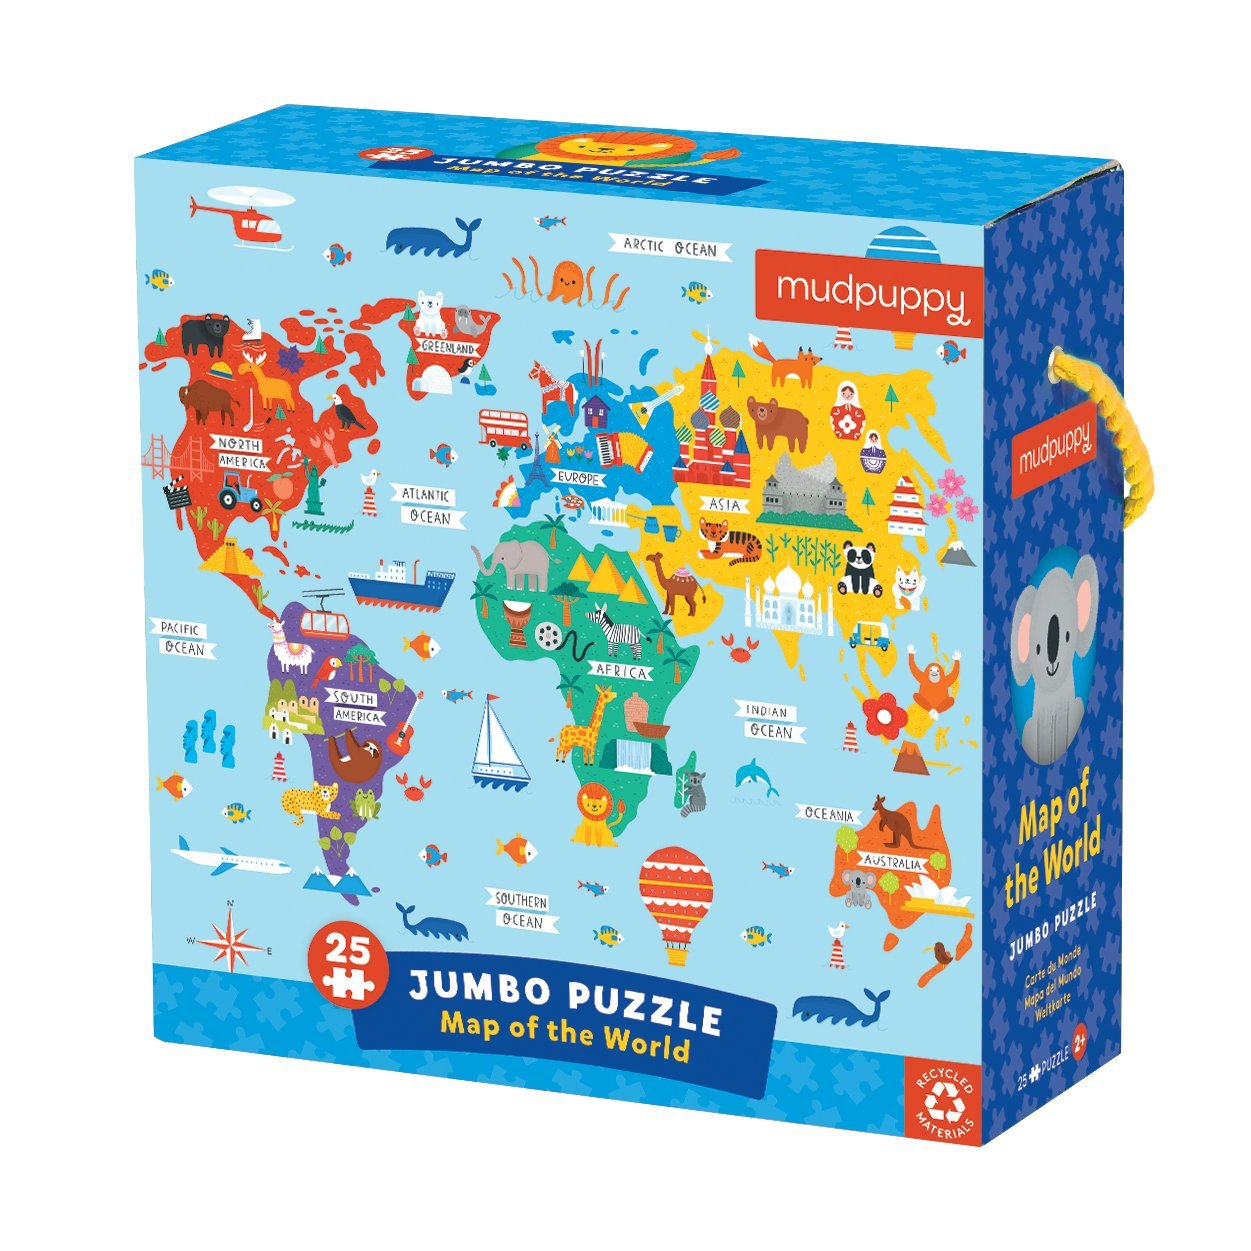 Map of the World Jumbo Puzzle - Mudpuppy